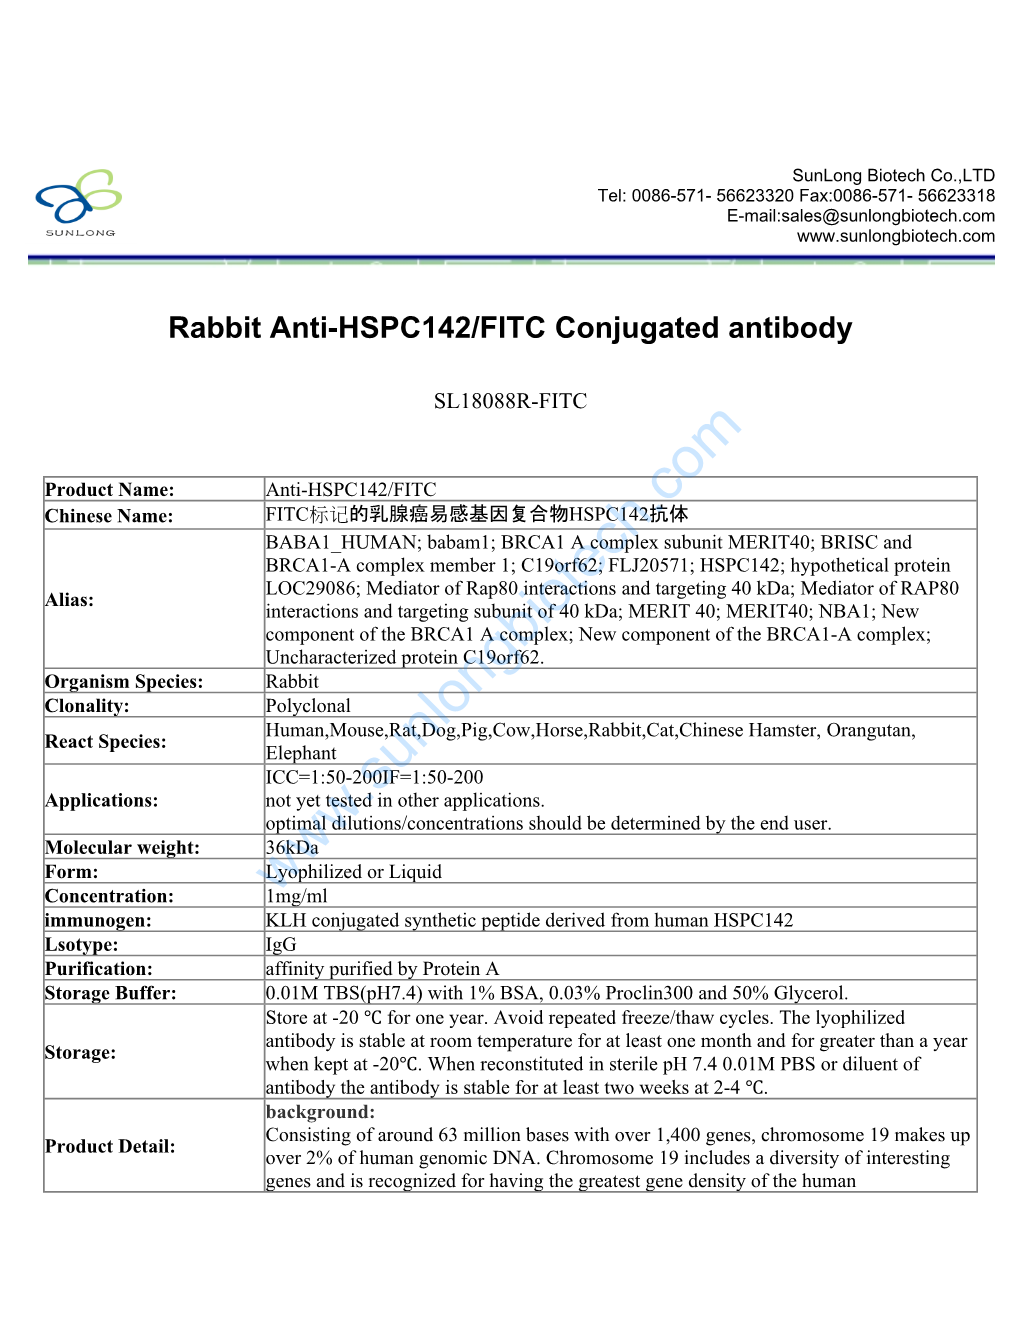 Rabbit Anti-HSPC142/FITC Conjugated Antibody